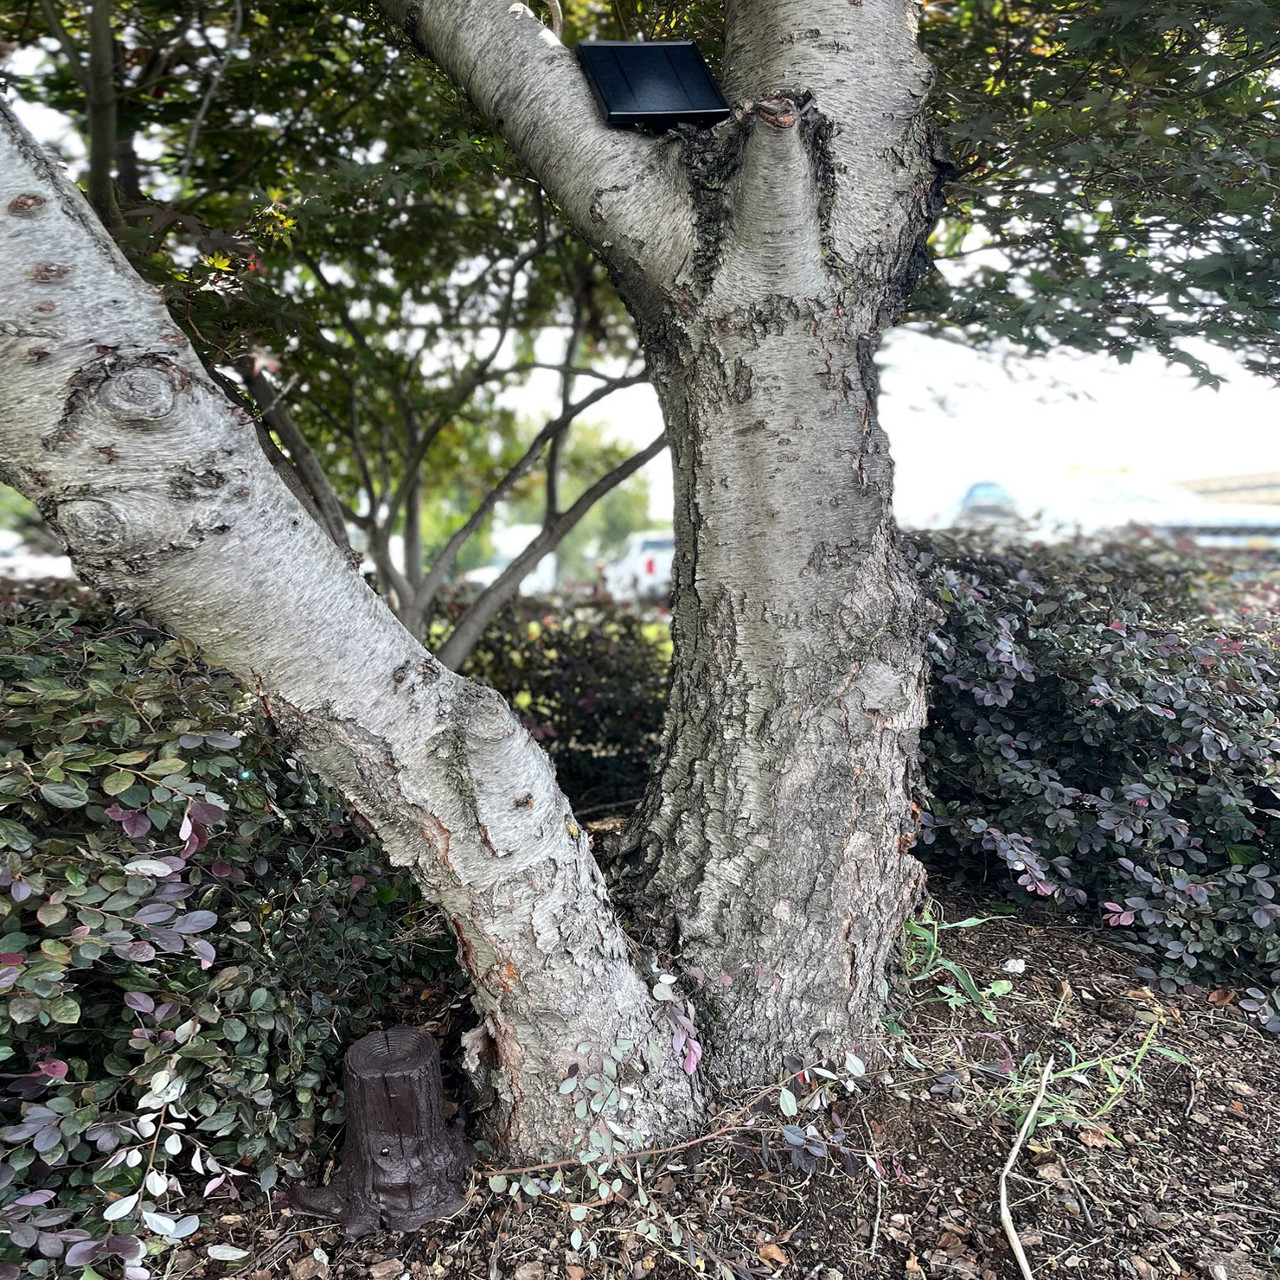 Solar Powered Outdoor Hidden WIFI Camera Tree Stump